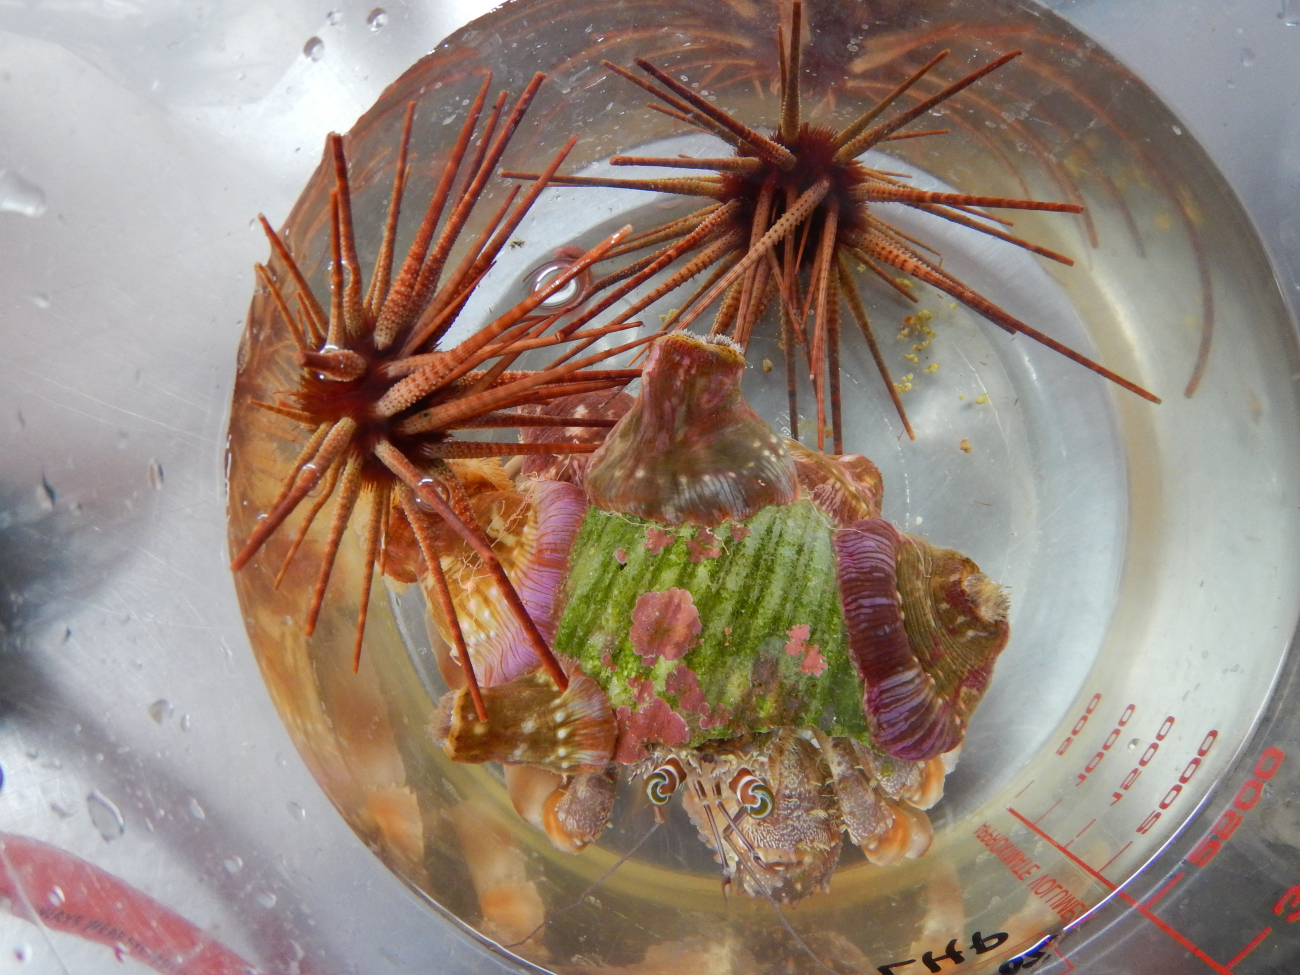 Hermit Crab, Sea Urchin, Anemones